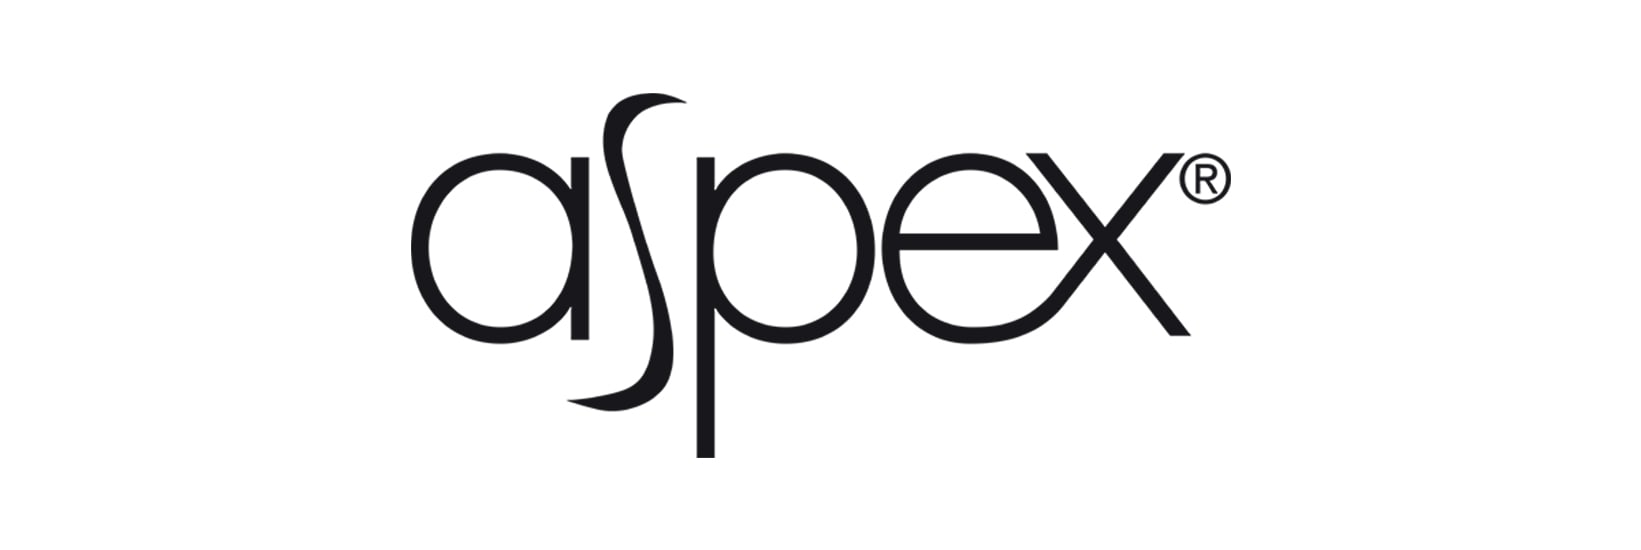 Aspex logo image